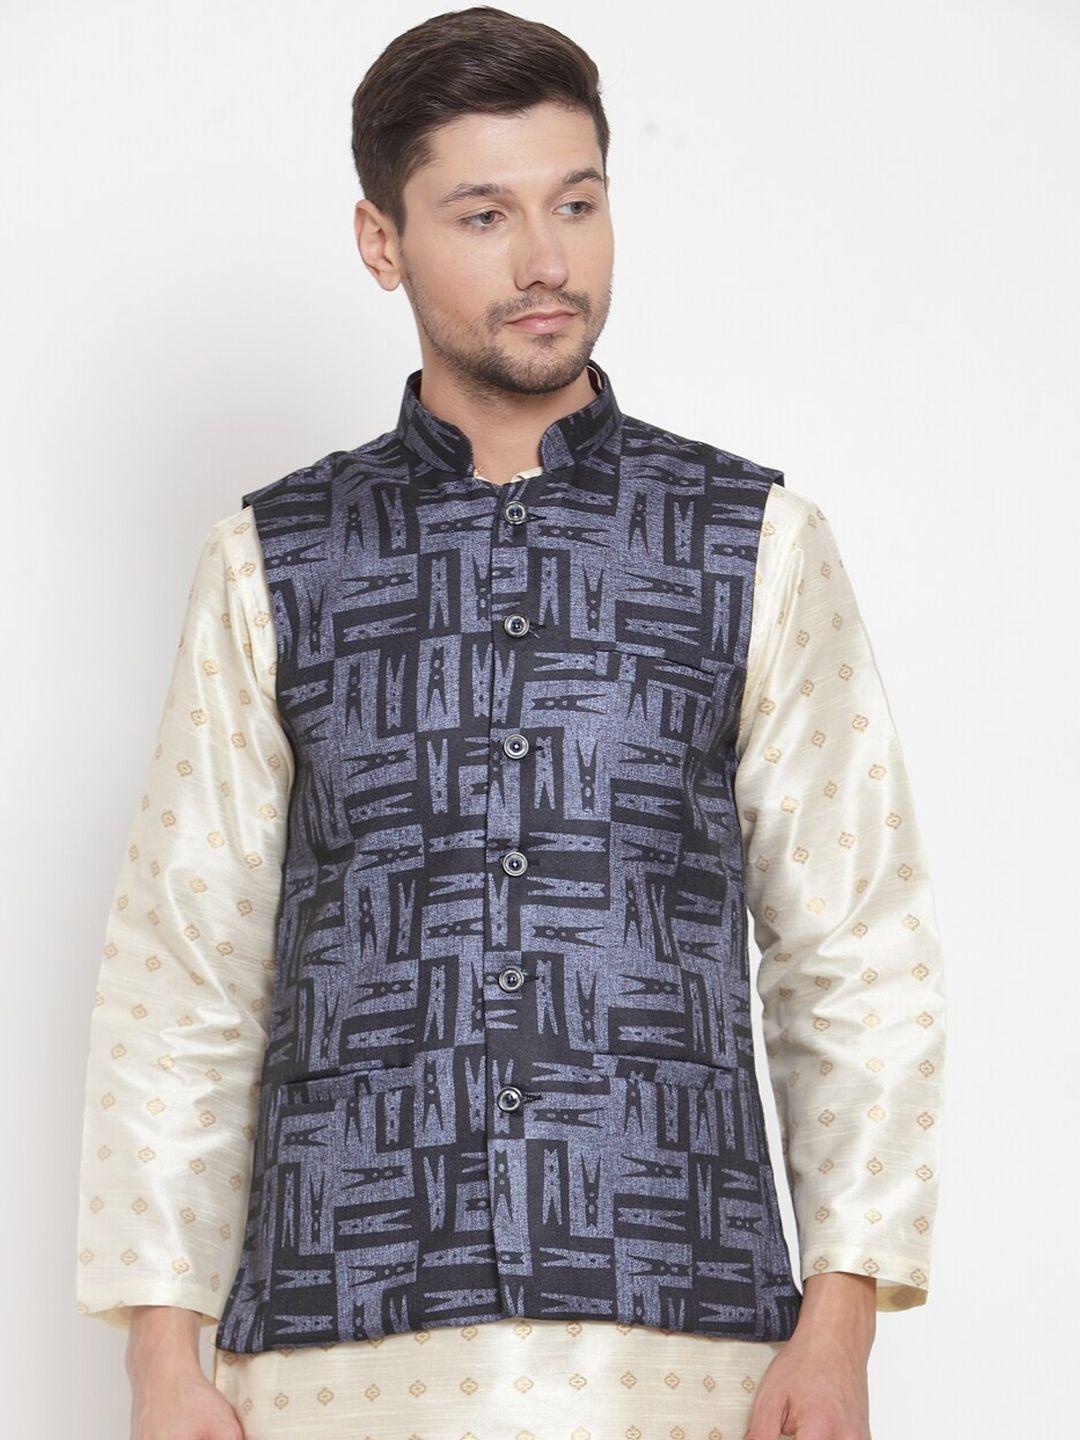 klotthe men charcoal black & grey woven-design wool blend nehru jacket